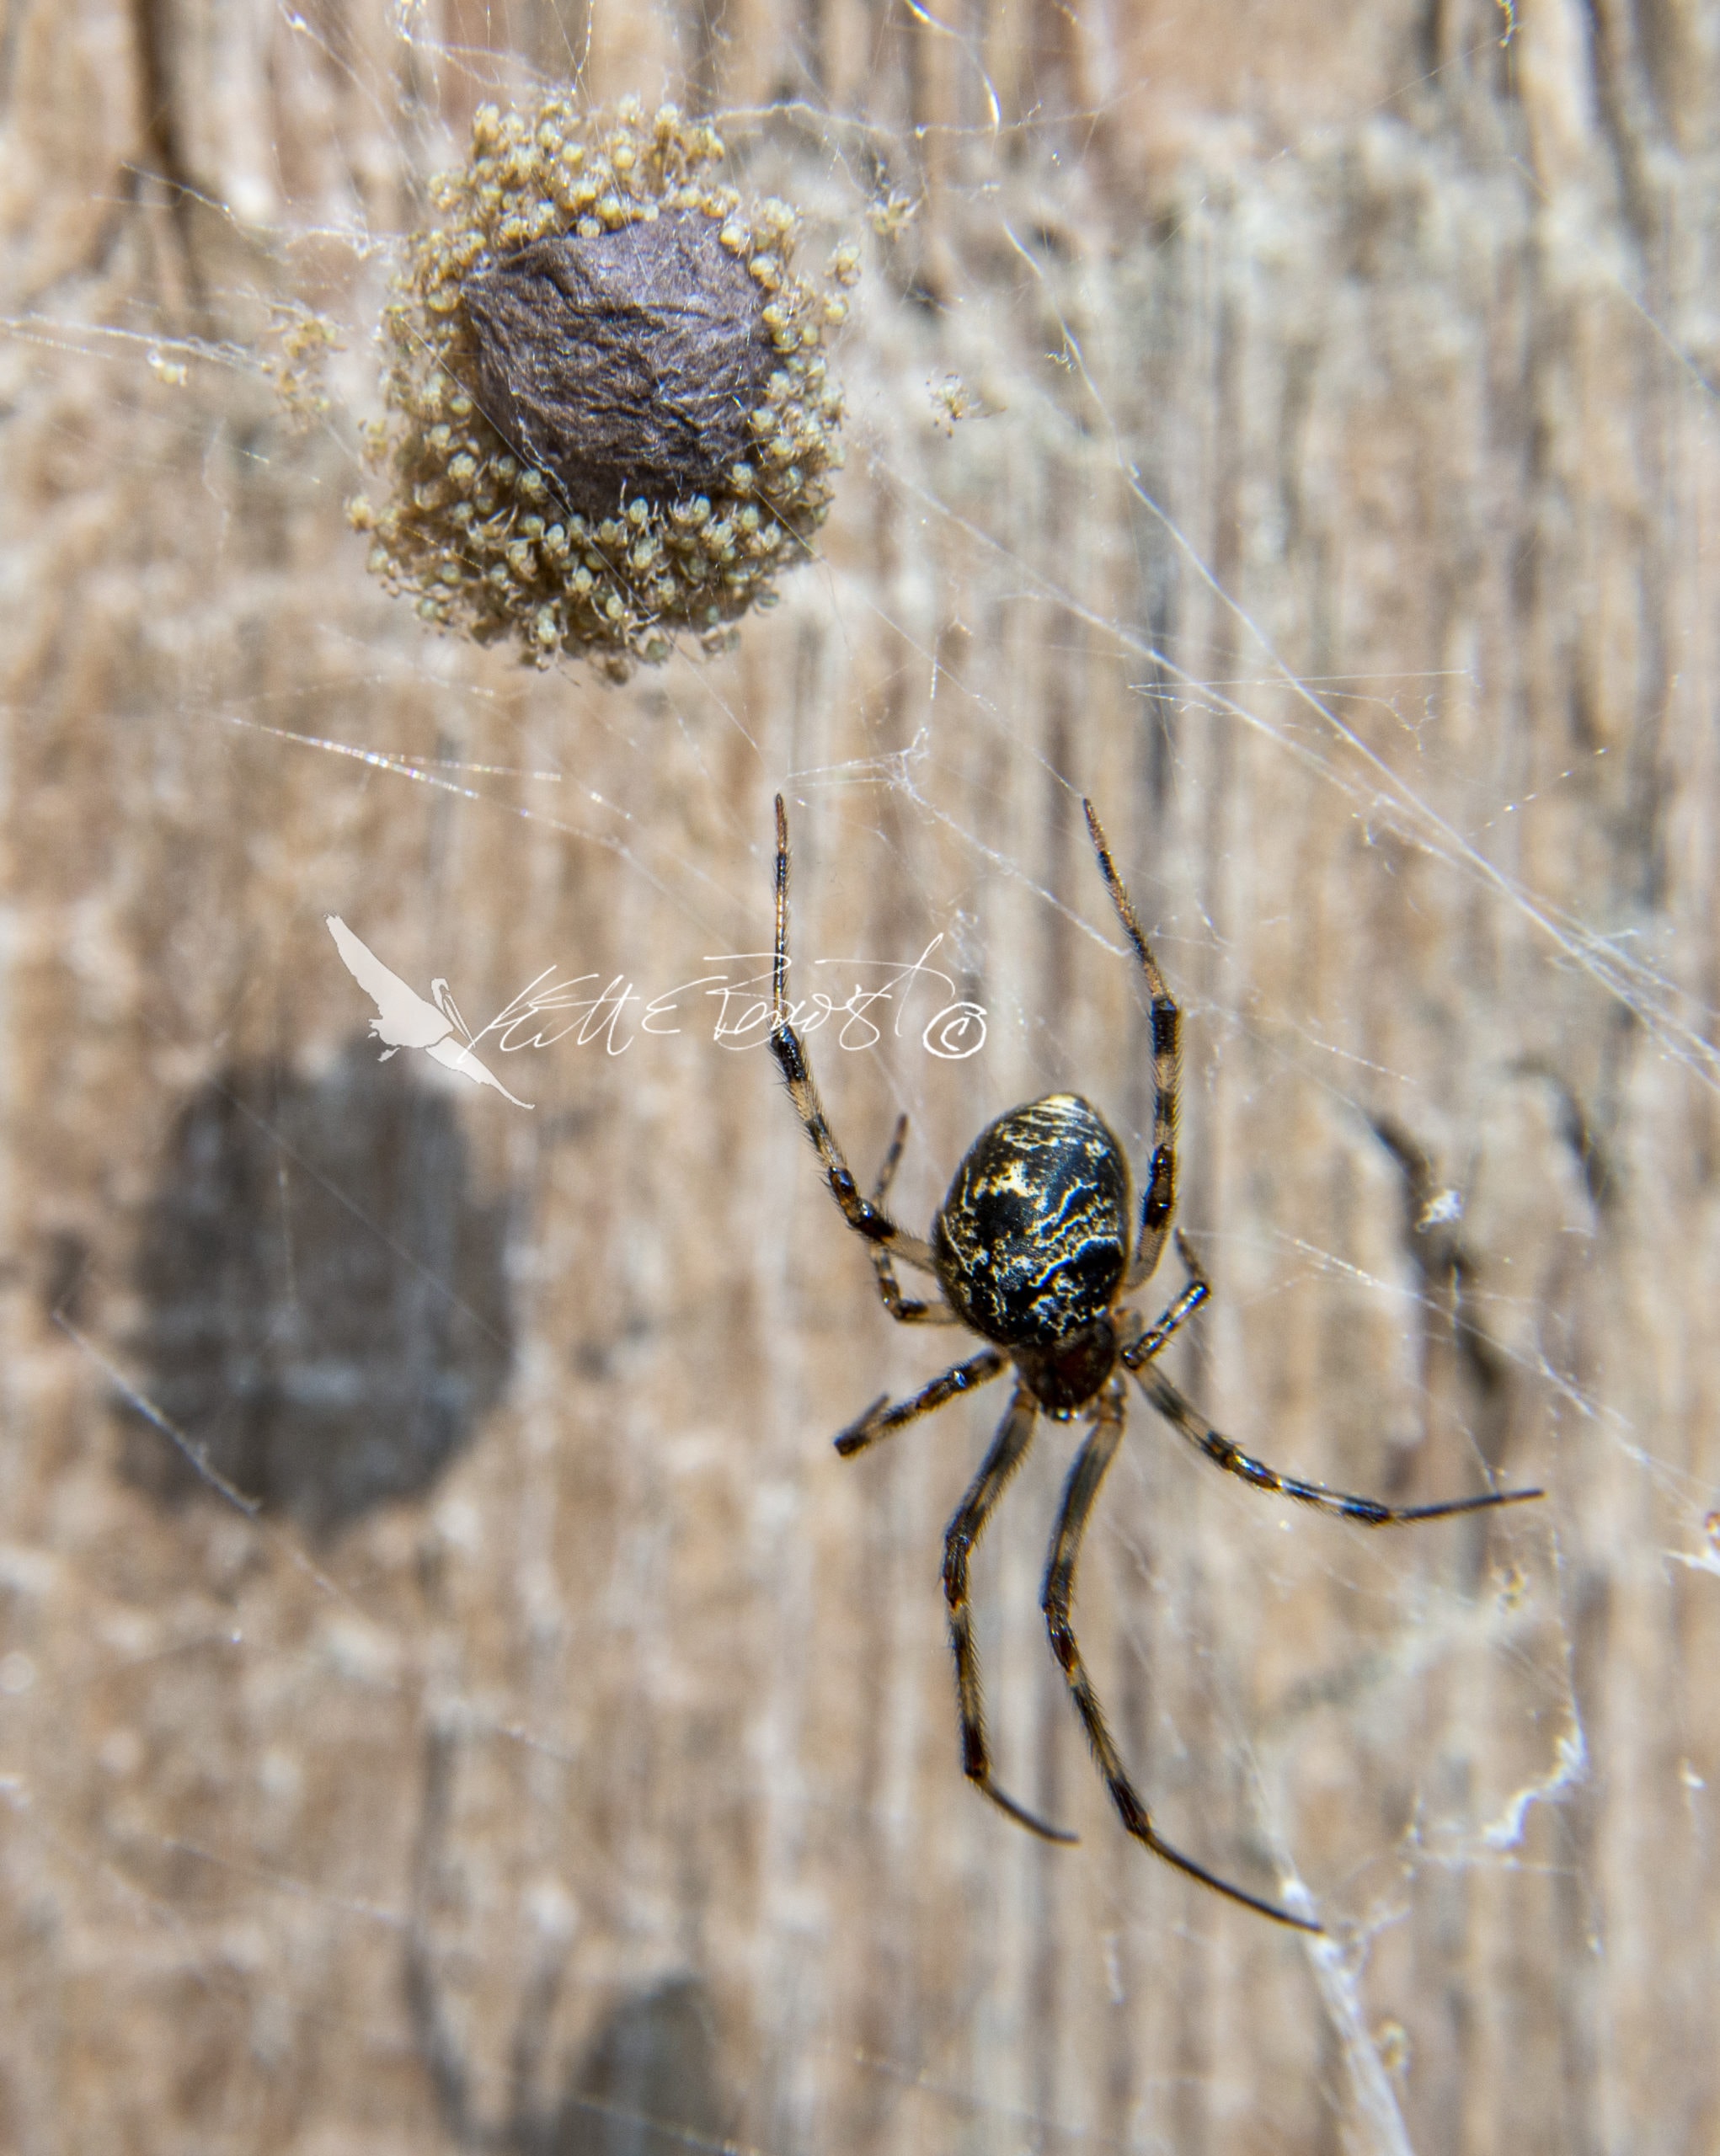 Picture of Parasteatoda tepidariorum (Common House Spider) - Female - Dorsal,Egg sacs,Spiderlings,Webs